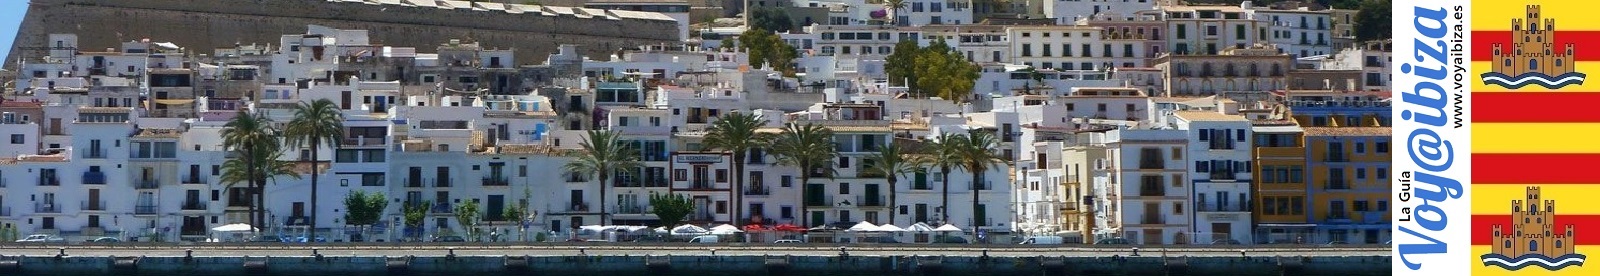 Barrio de la Marina, Ibiza (Eivissa)